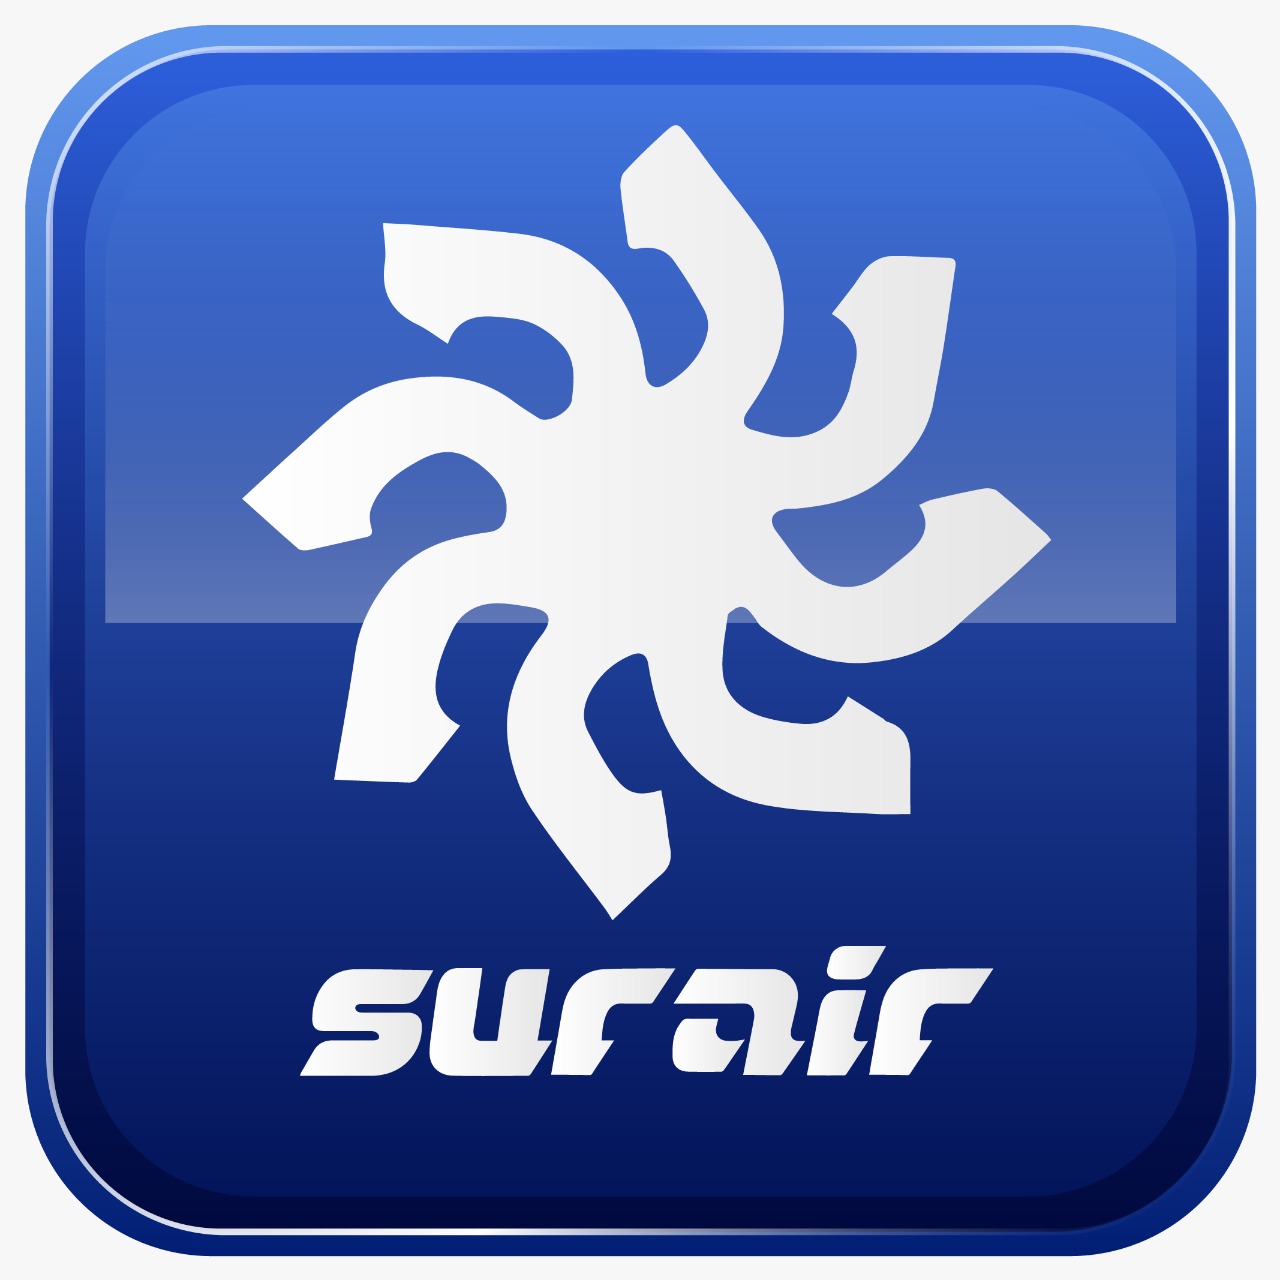 Surair app splash